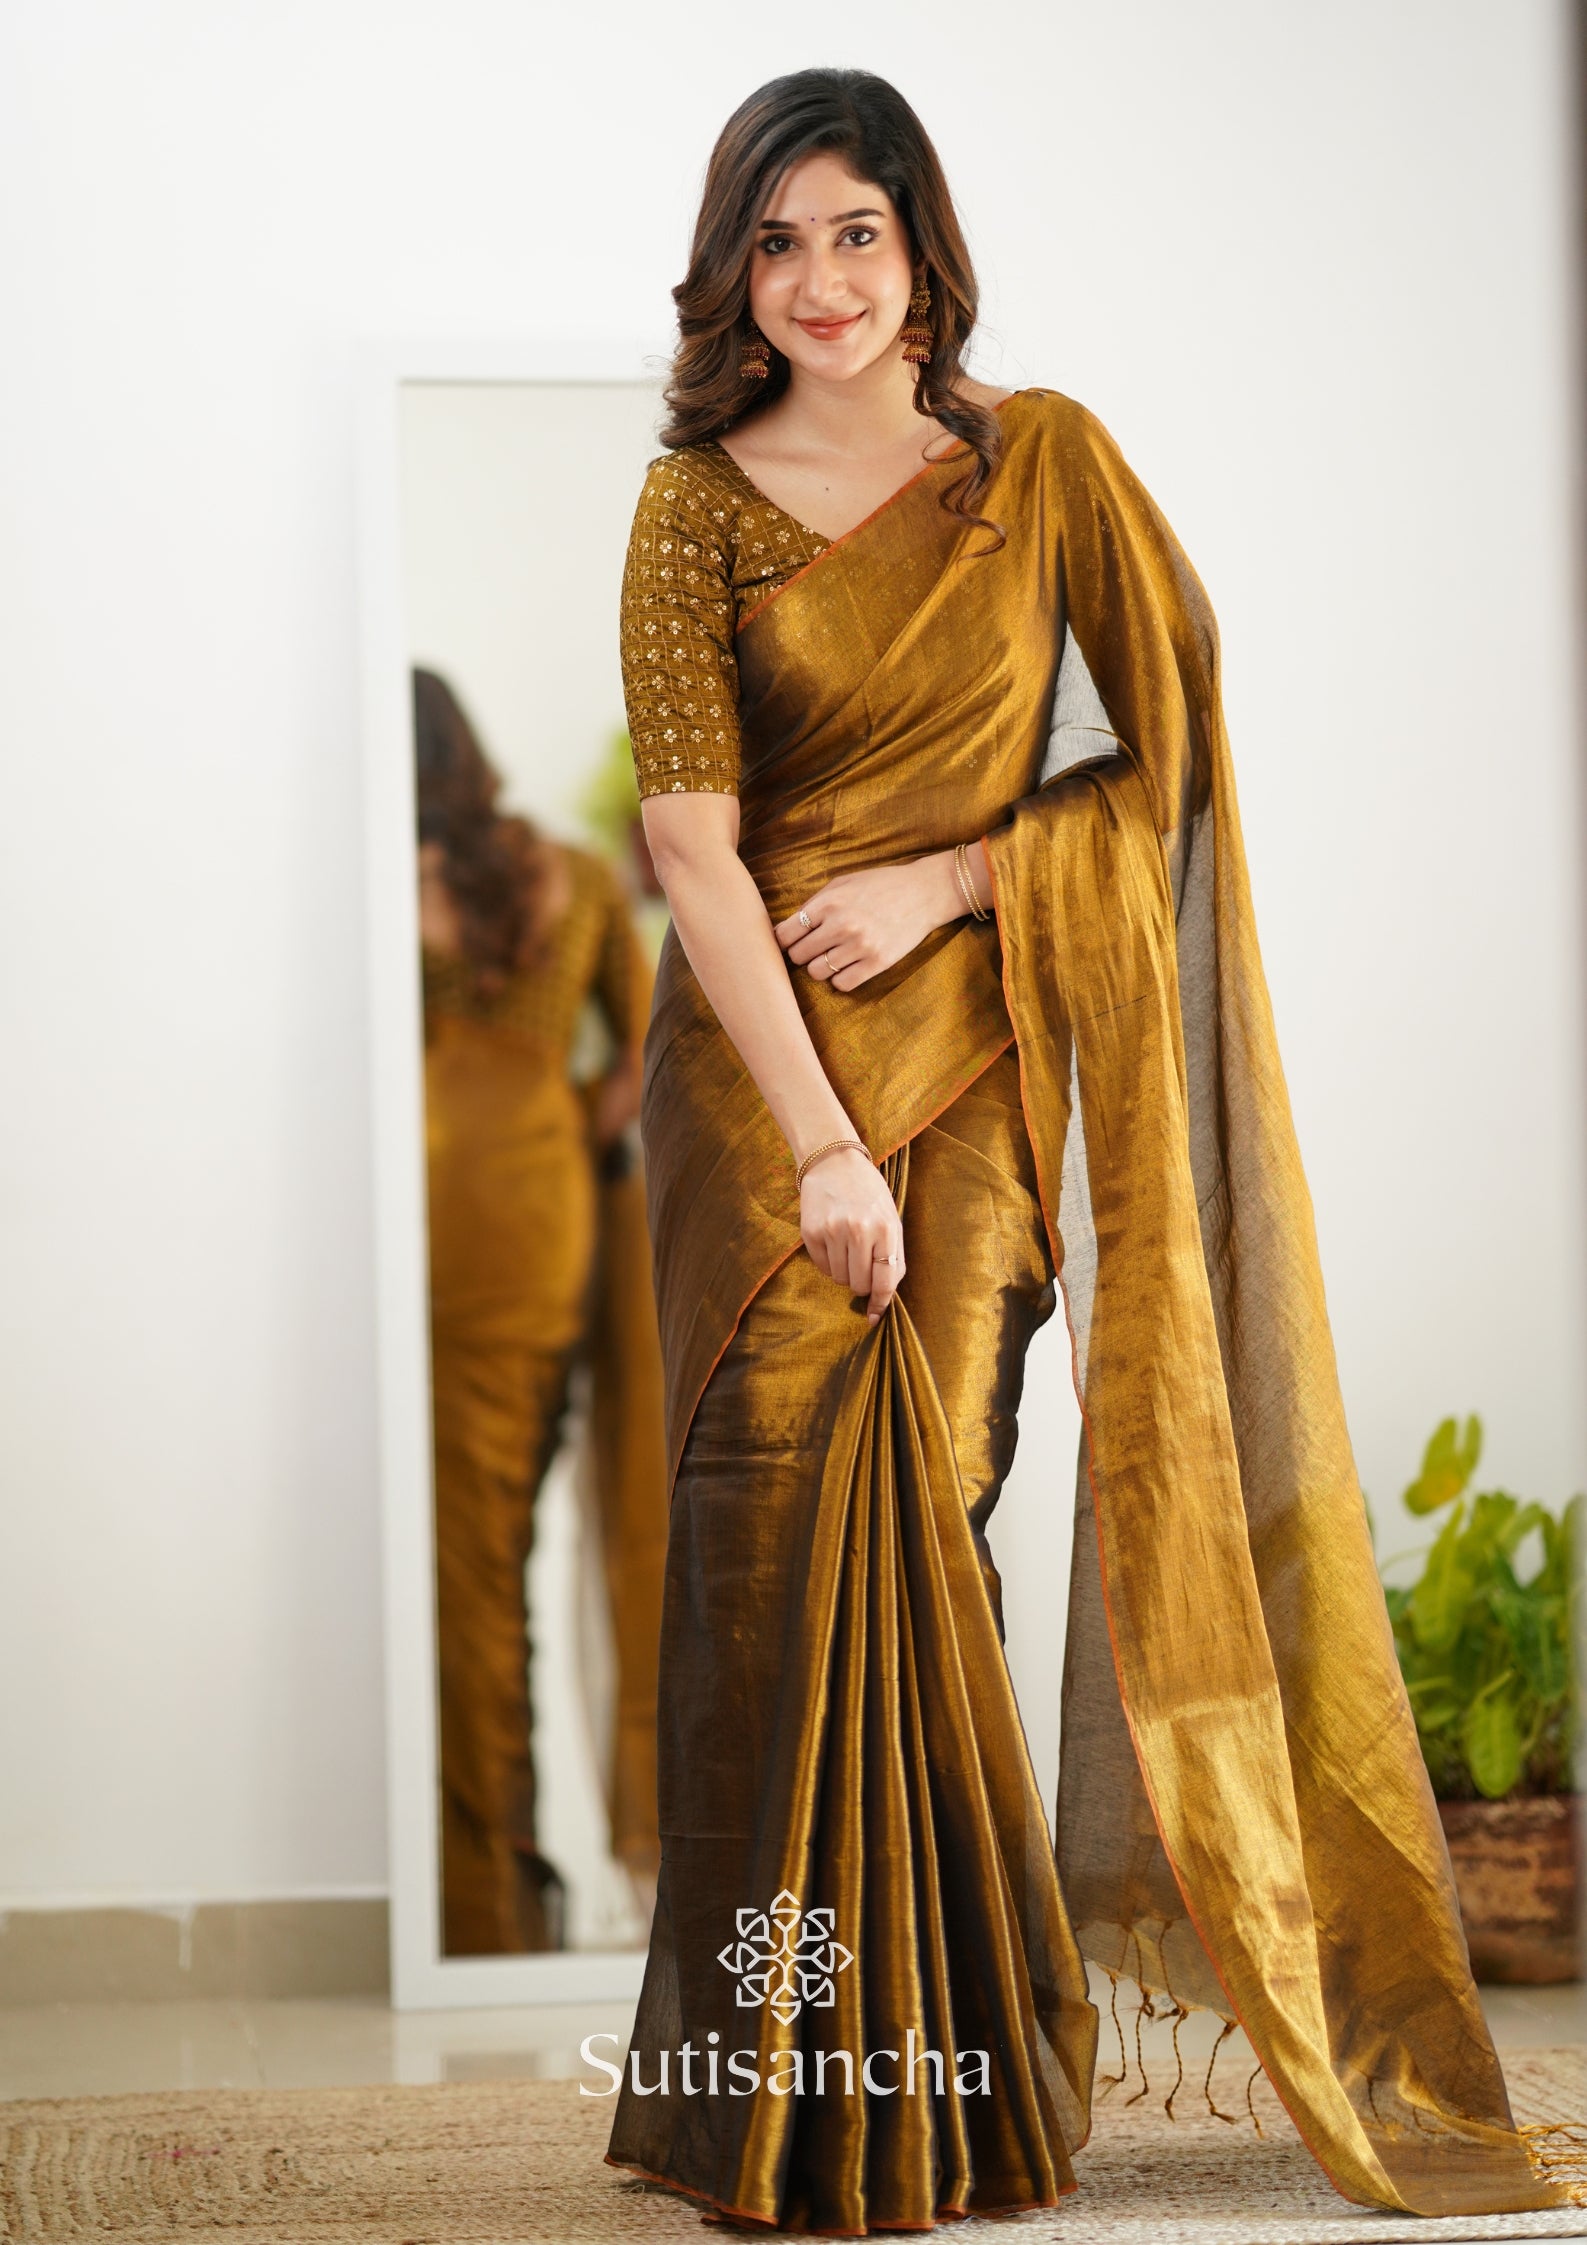 Sutisancha Metallic Gold Handloom Tissue Saree With Designer Blouse